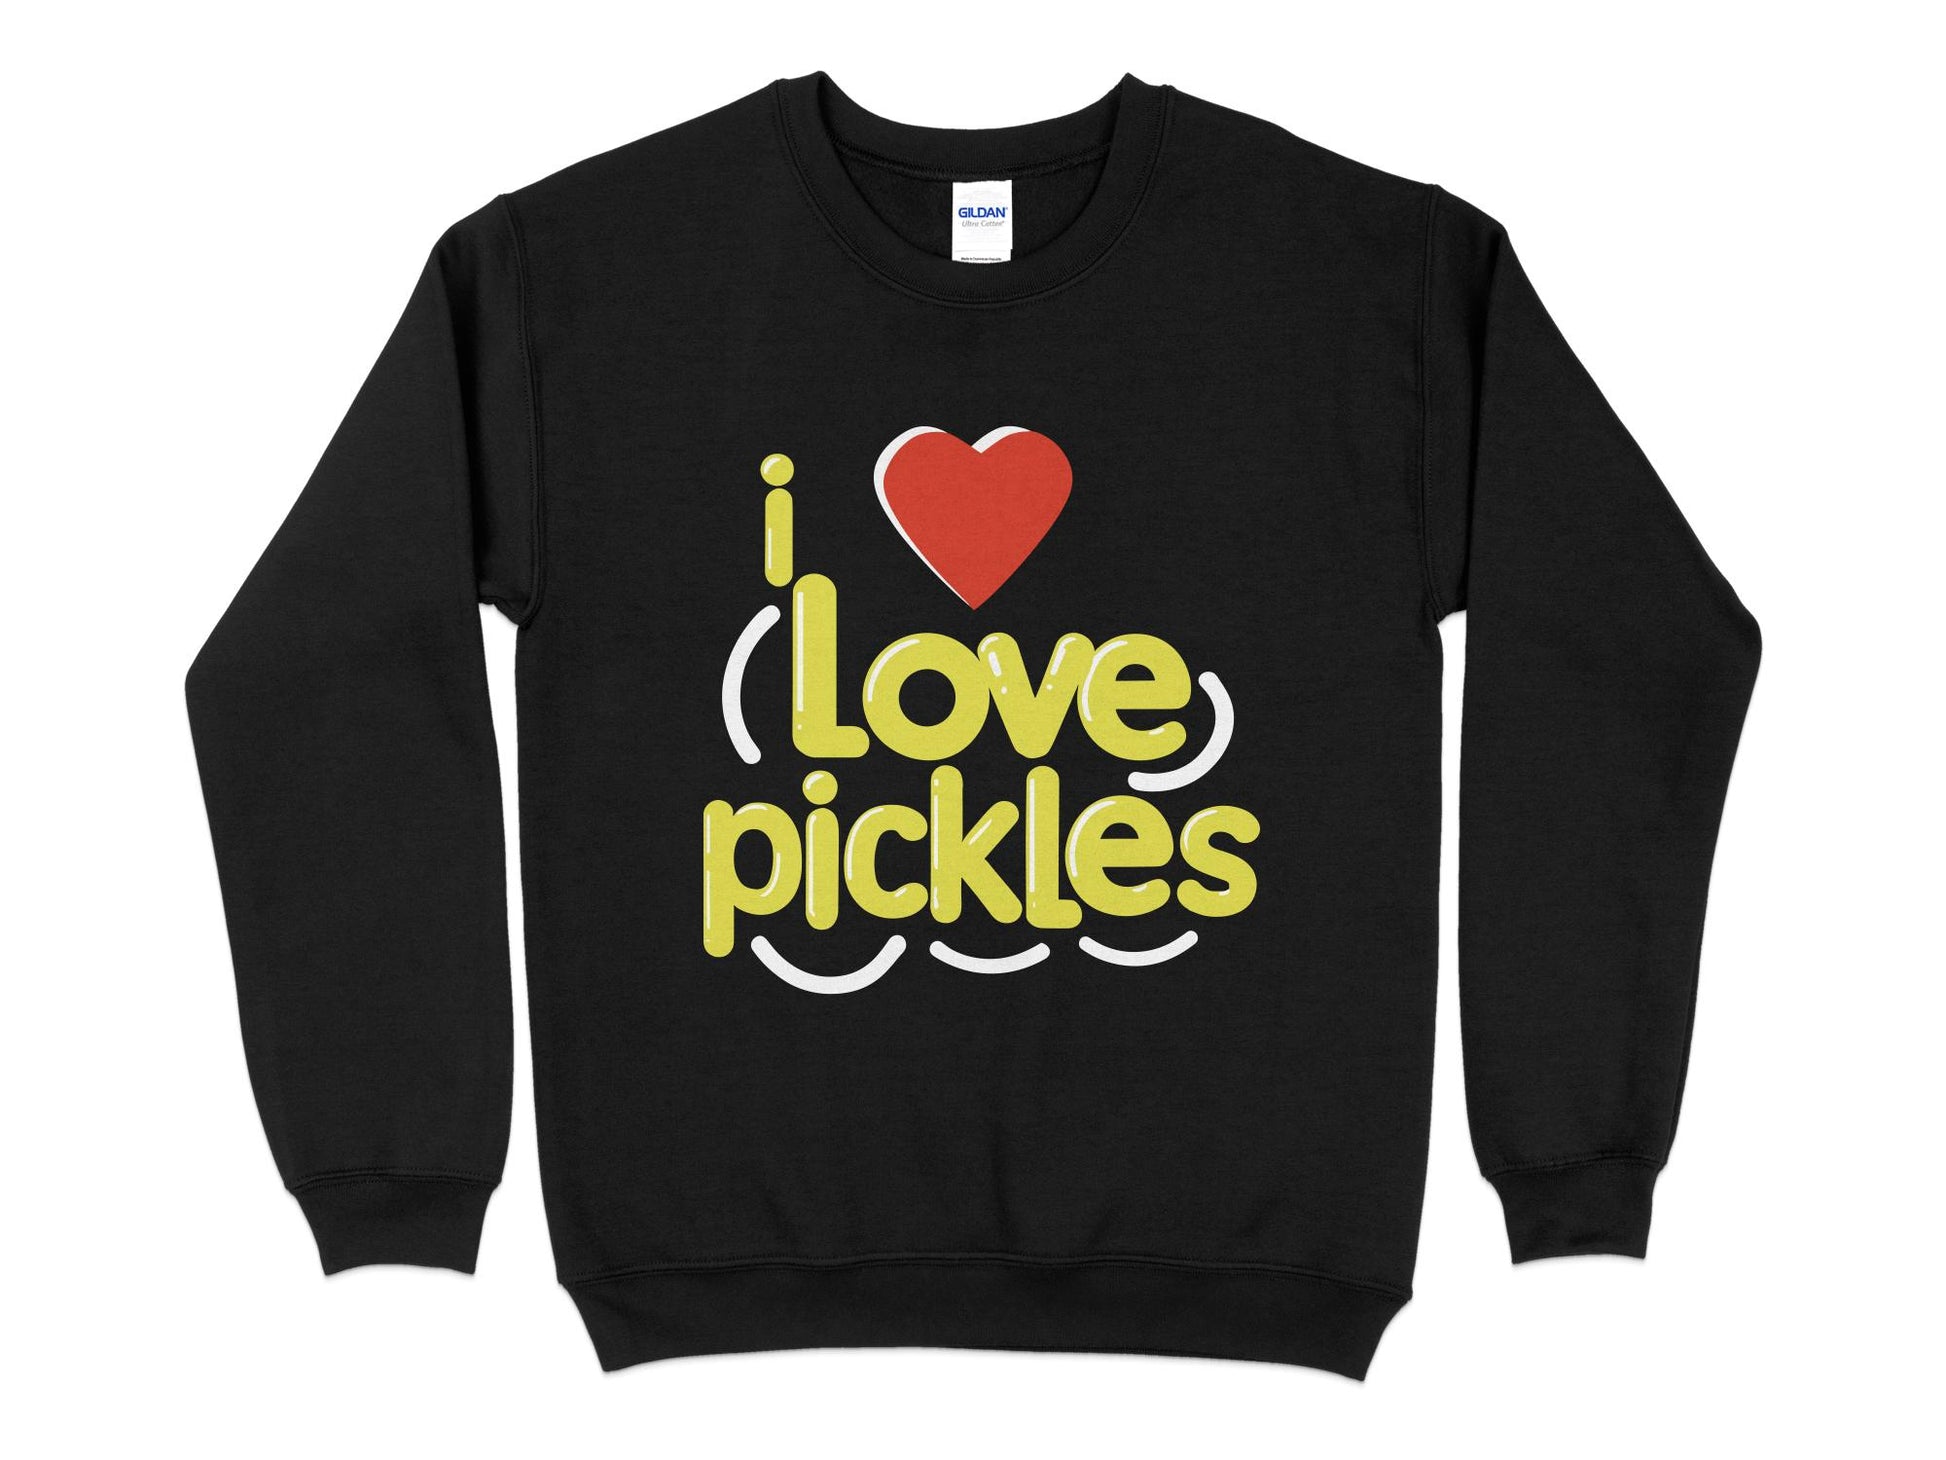 I Love Pickles Sweatshirt, black